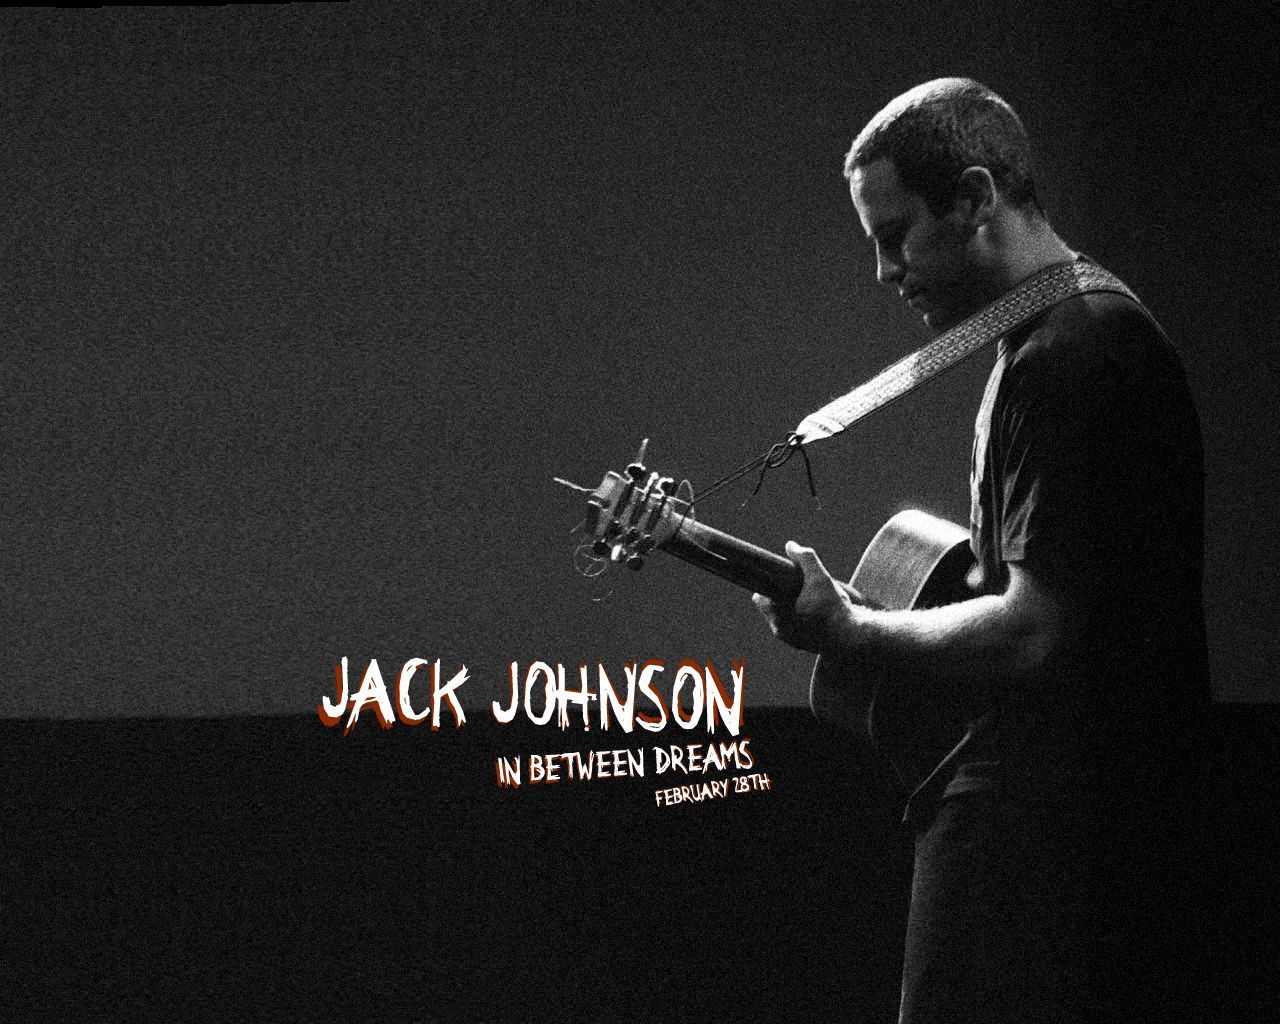 Jack Johnson Wallpaper: Jack Johnson .com